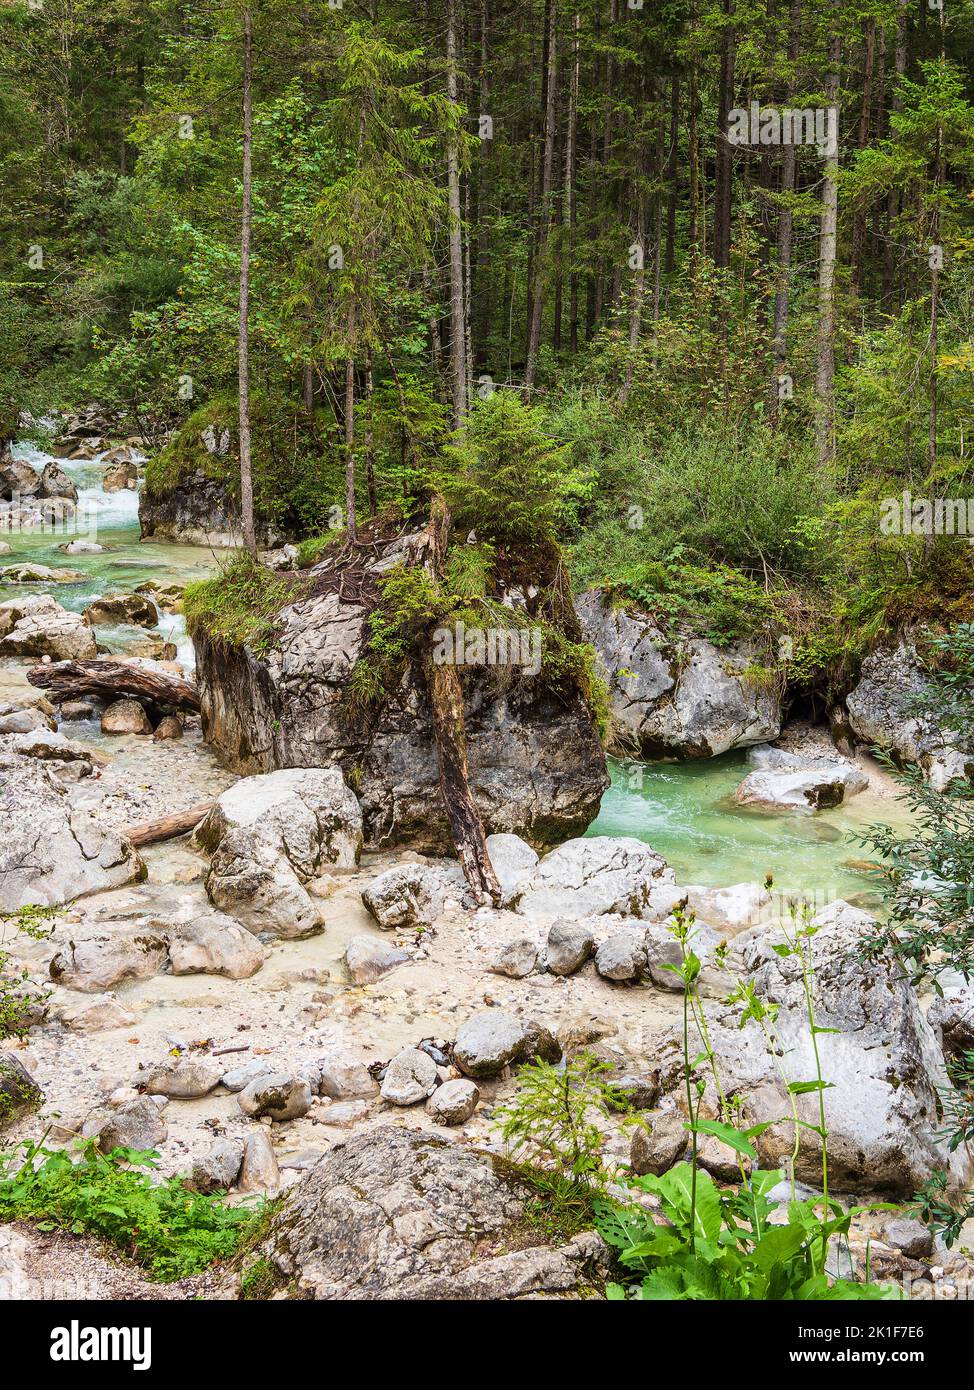 River Ramsauer Ache in the Berchtesgaden Alps, Germany. Stock Photo